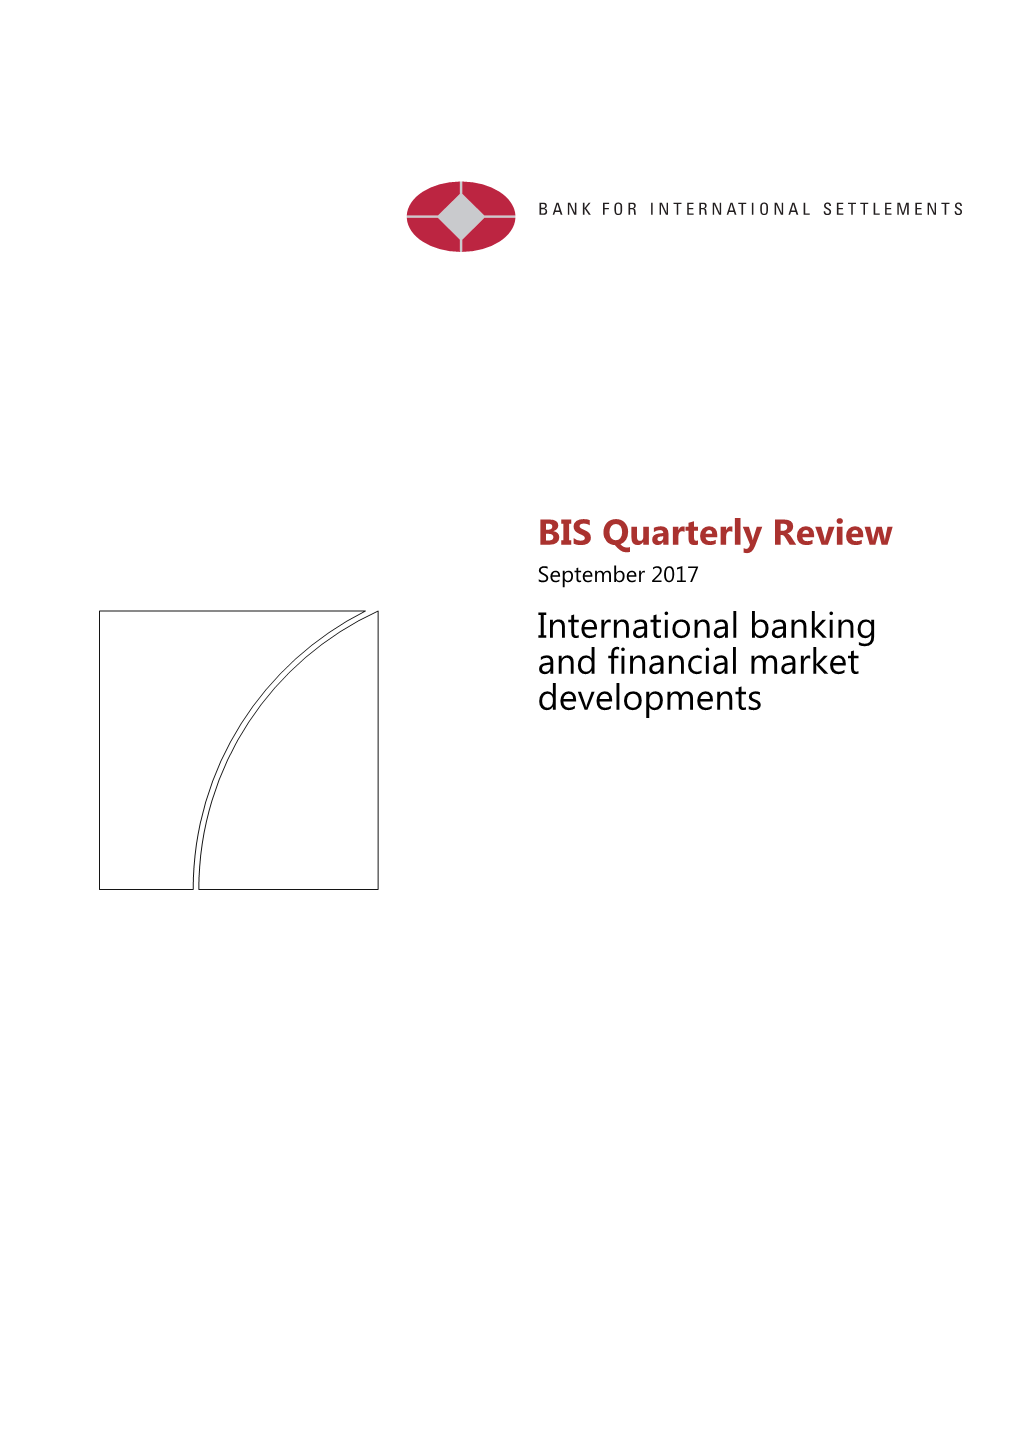 BIS Quarterly Review September 2017 International Banking and Financial Market Developments